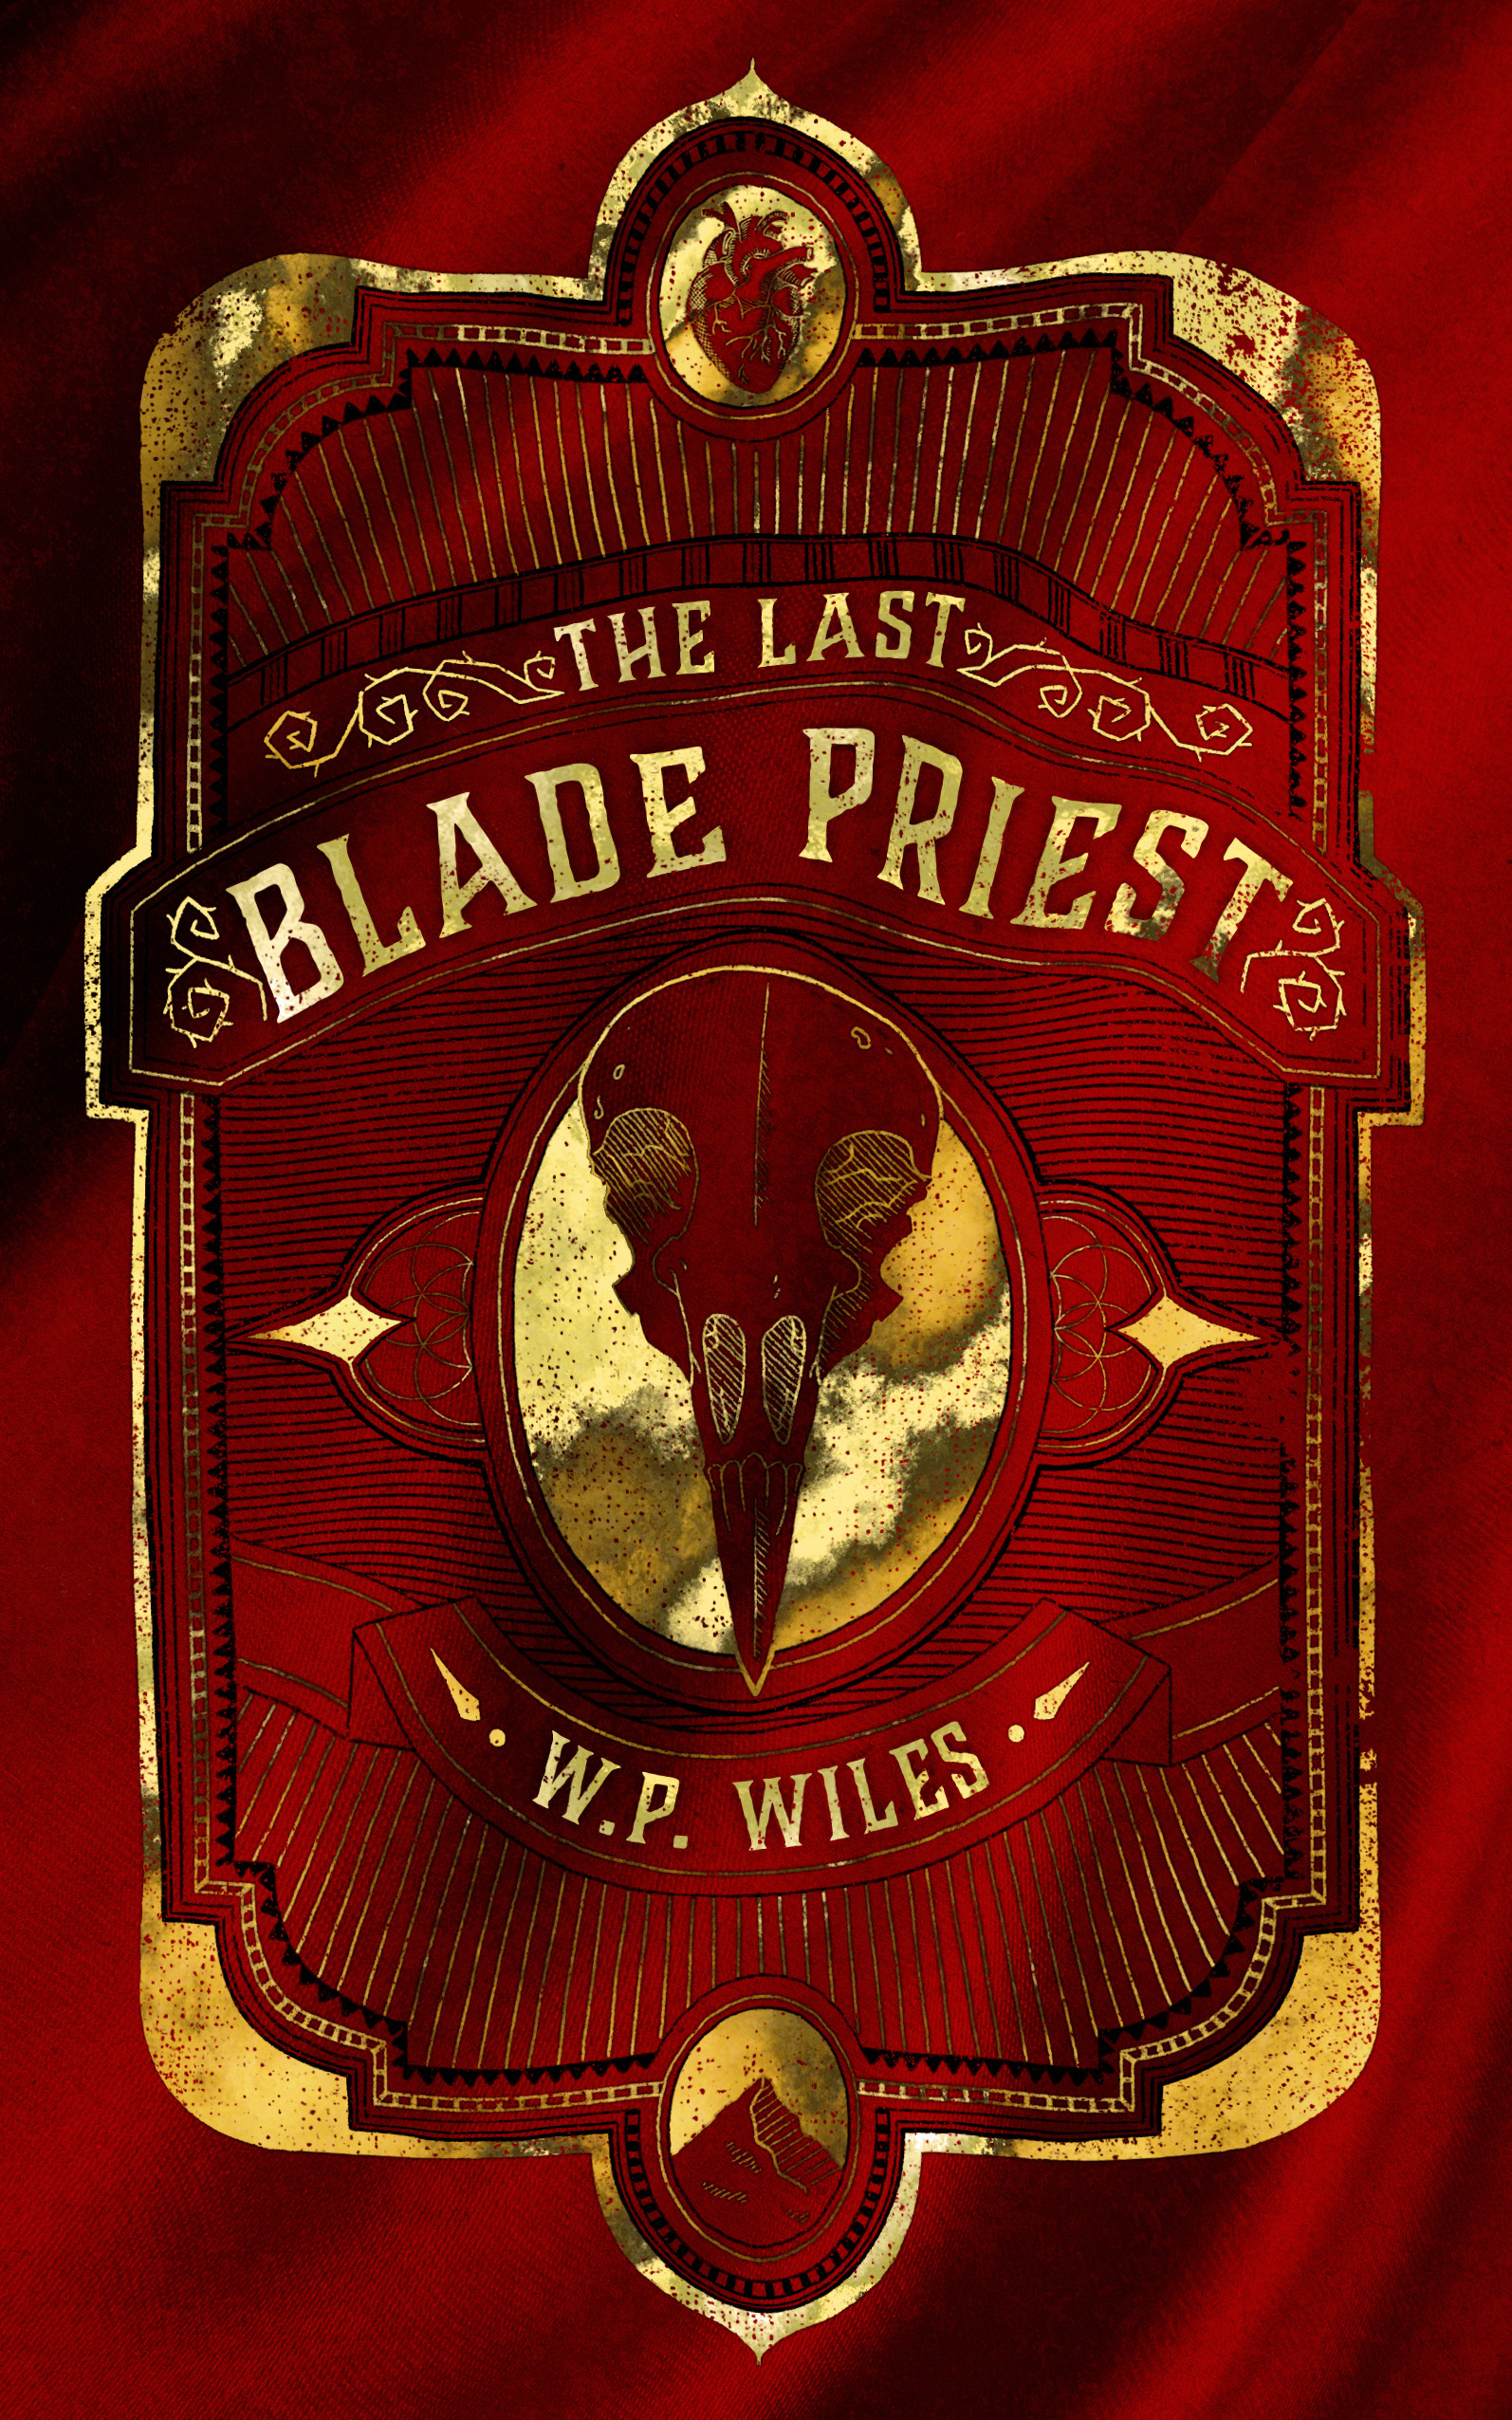 The Last Blade Priest | Wiles, W P